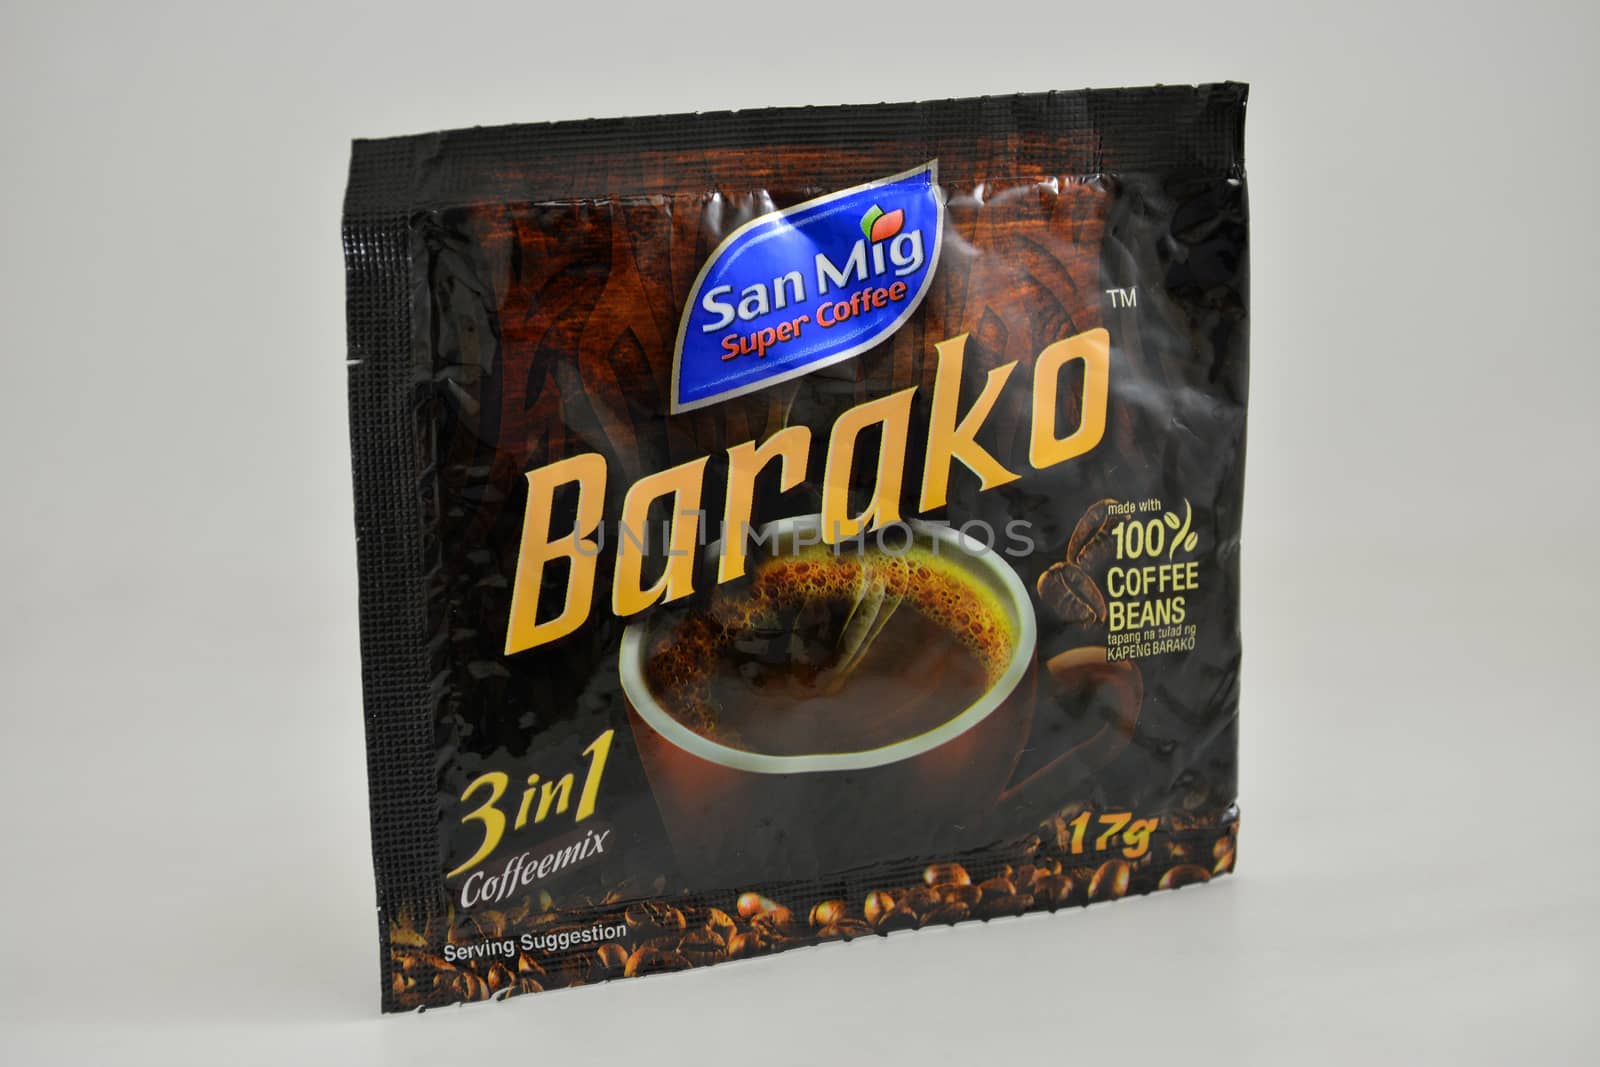 MANILA, PH - JUNE 26 - San Mig barako coffee on June 26, 2020 in Manila, Philippines.